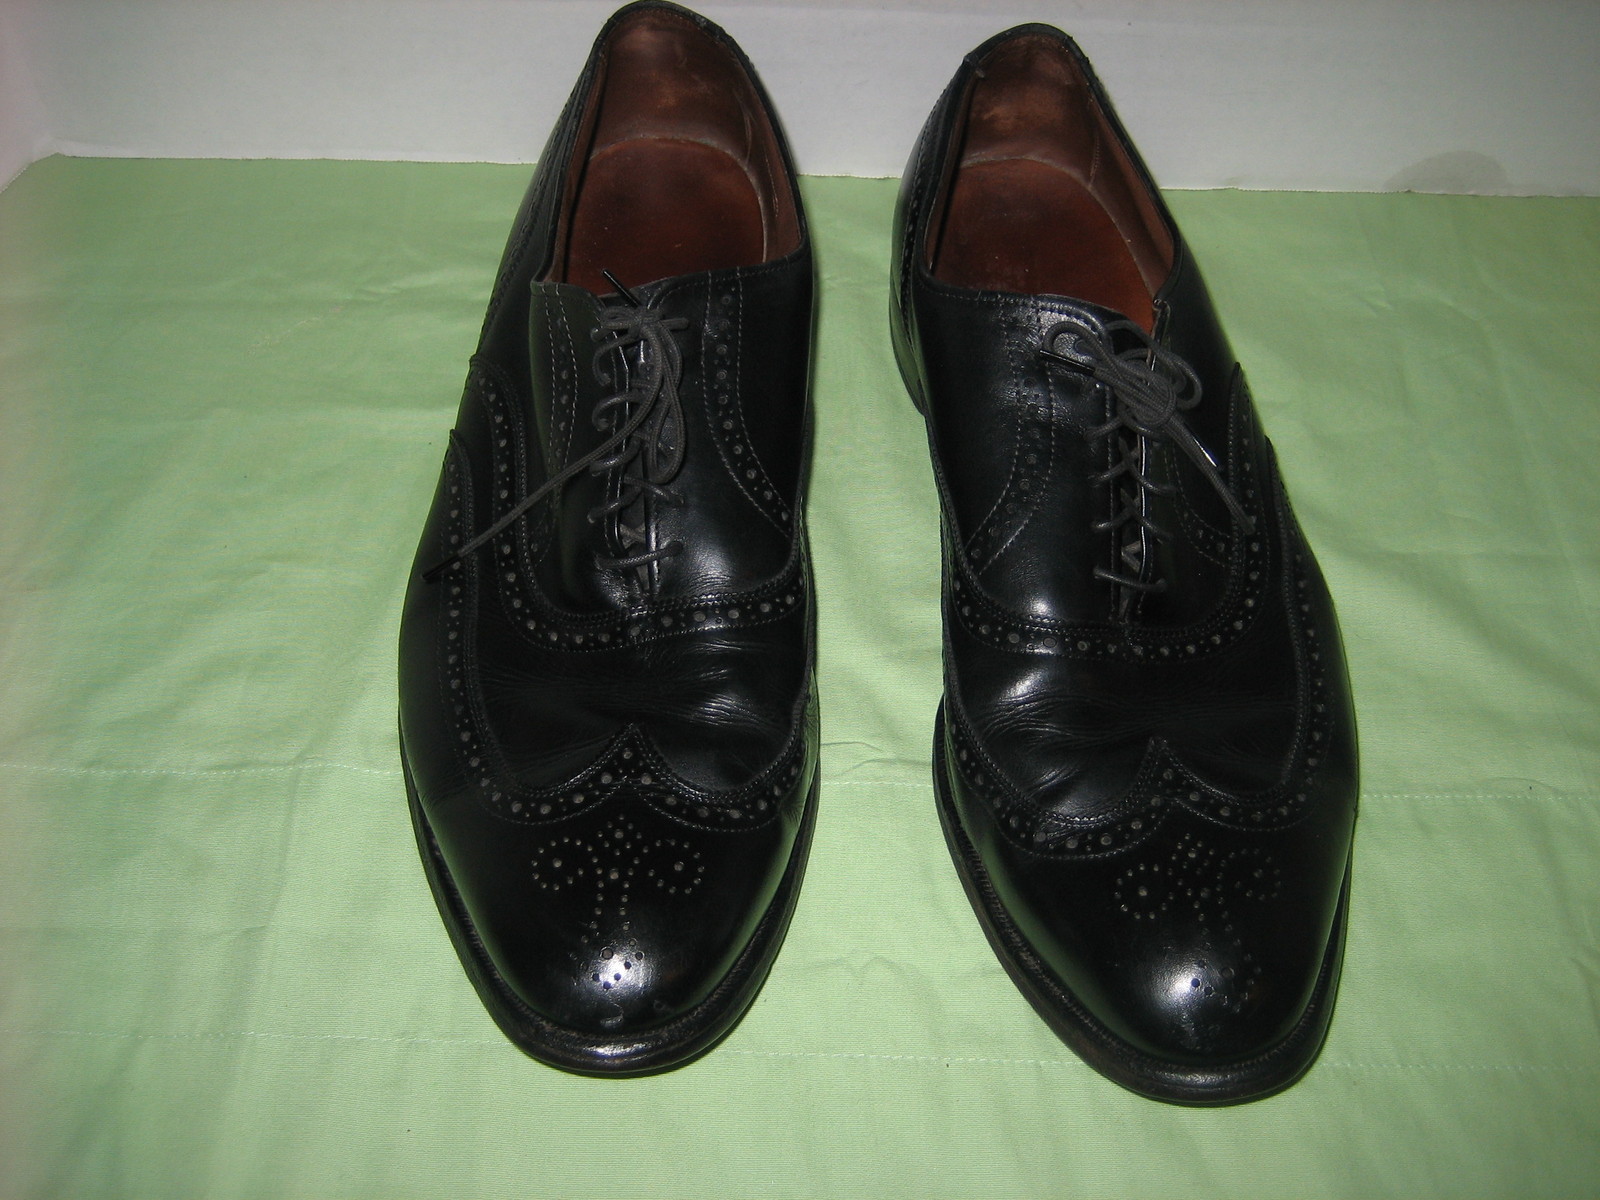 ALLEN EDMONDS 'CHESTER' Black Leather Oxford Wing-Tip Dress Shoes, Size ...